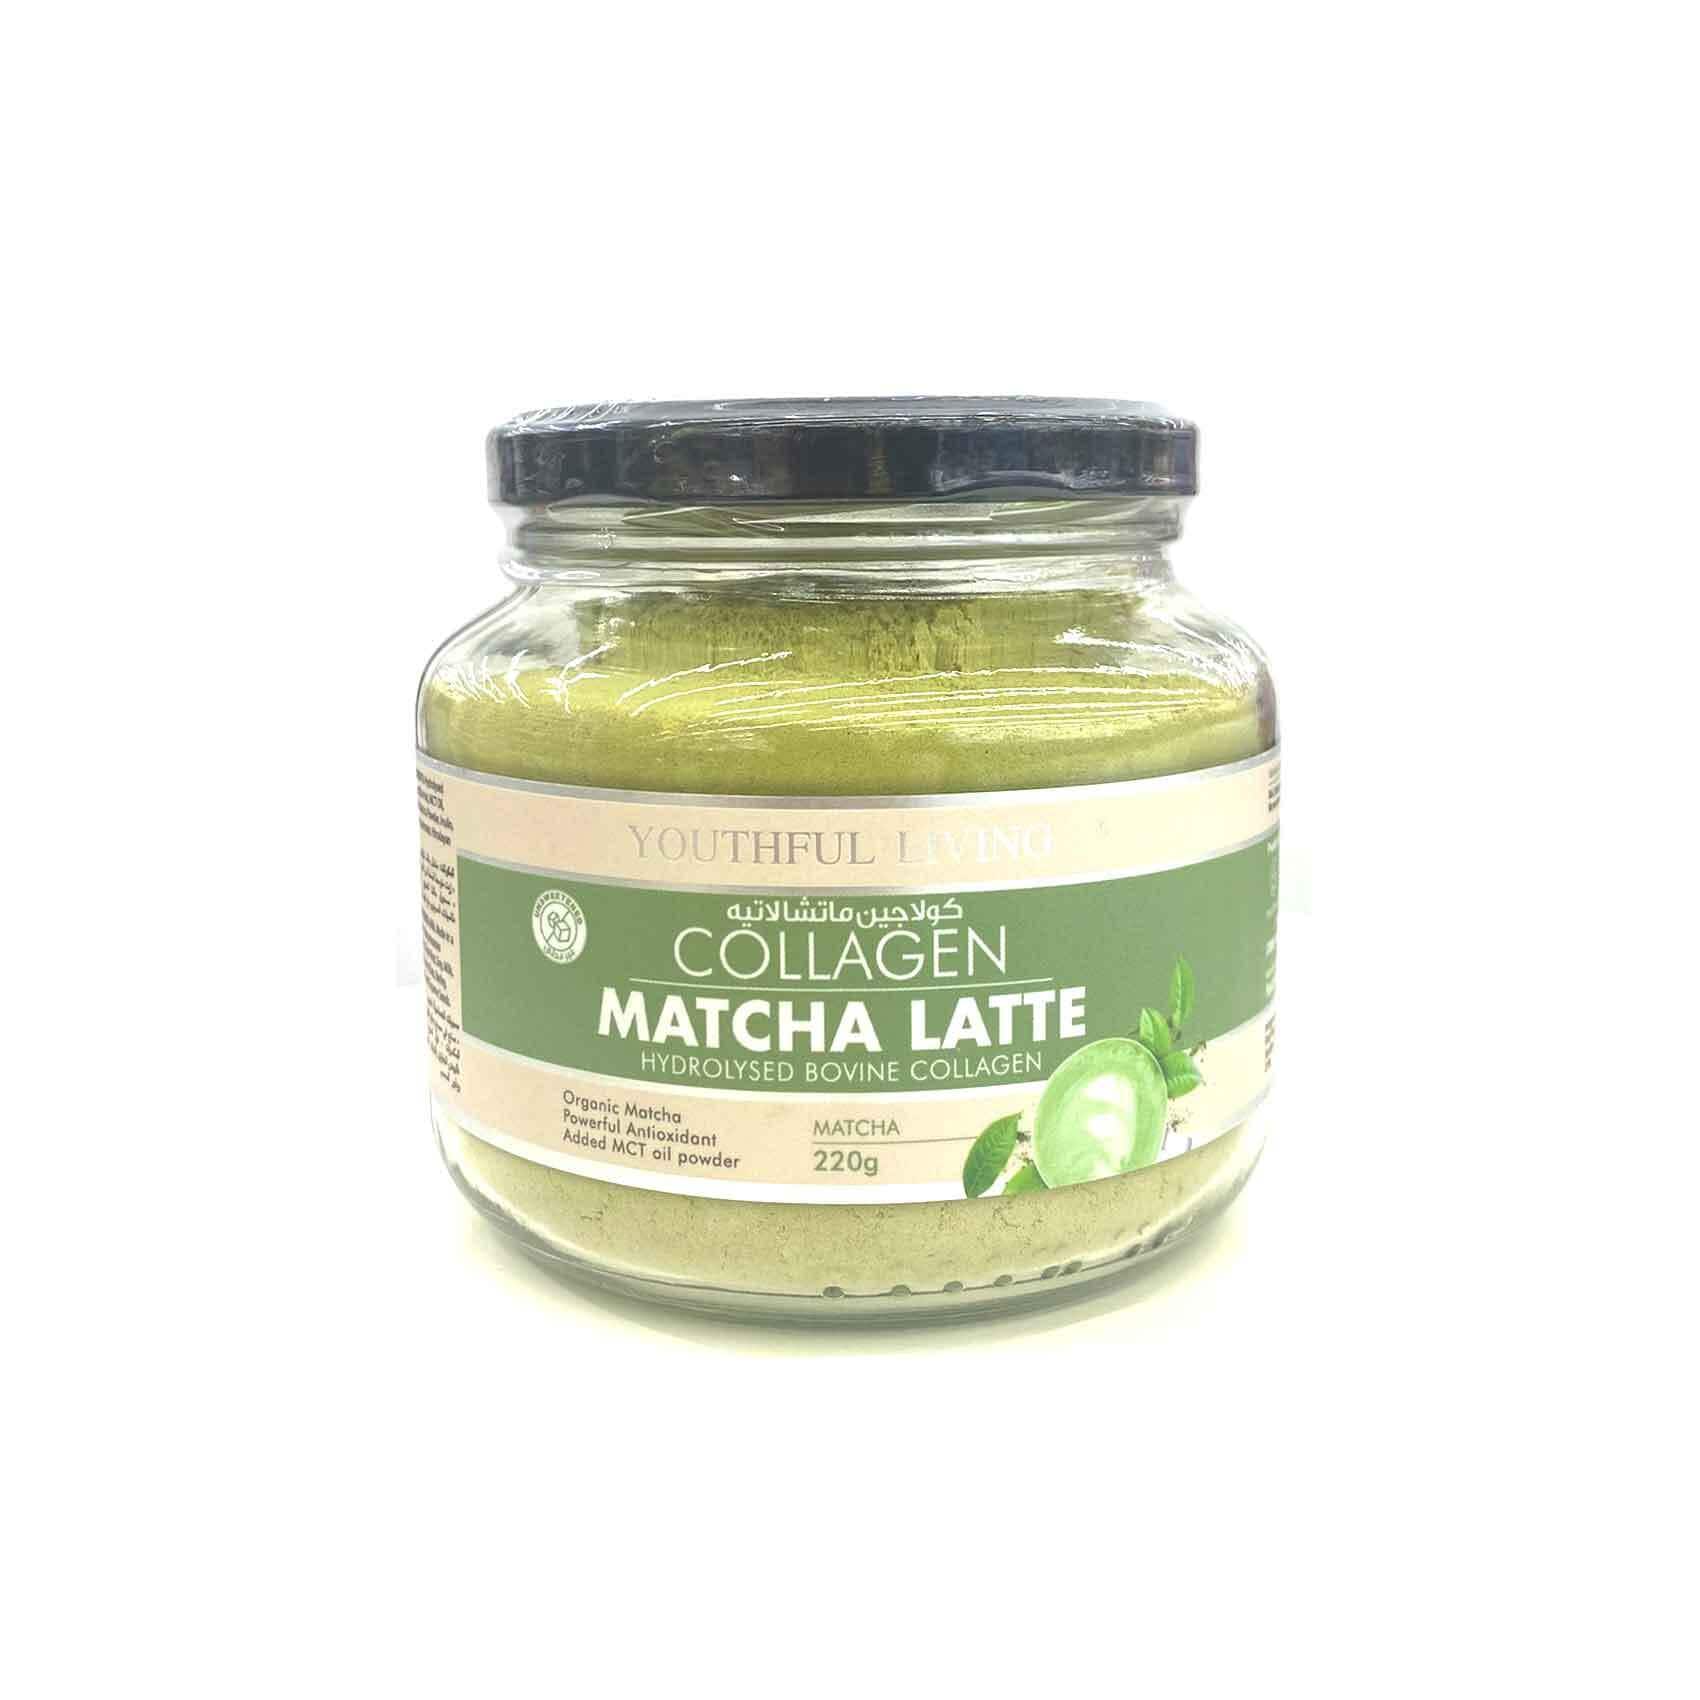 Matcha Collagen Latte - Biotona